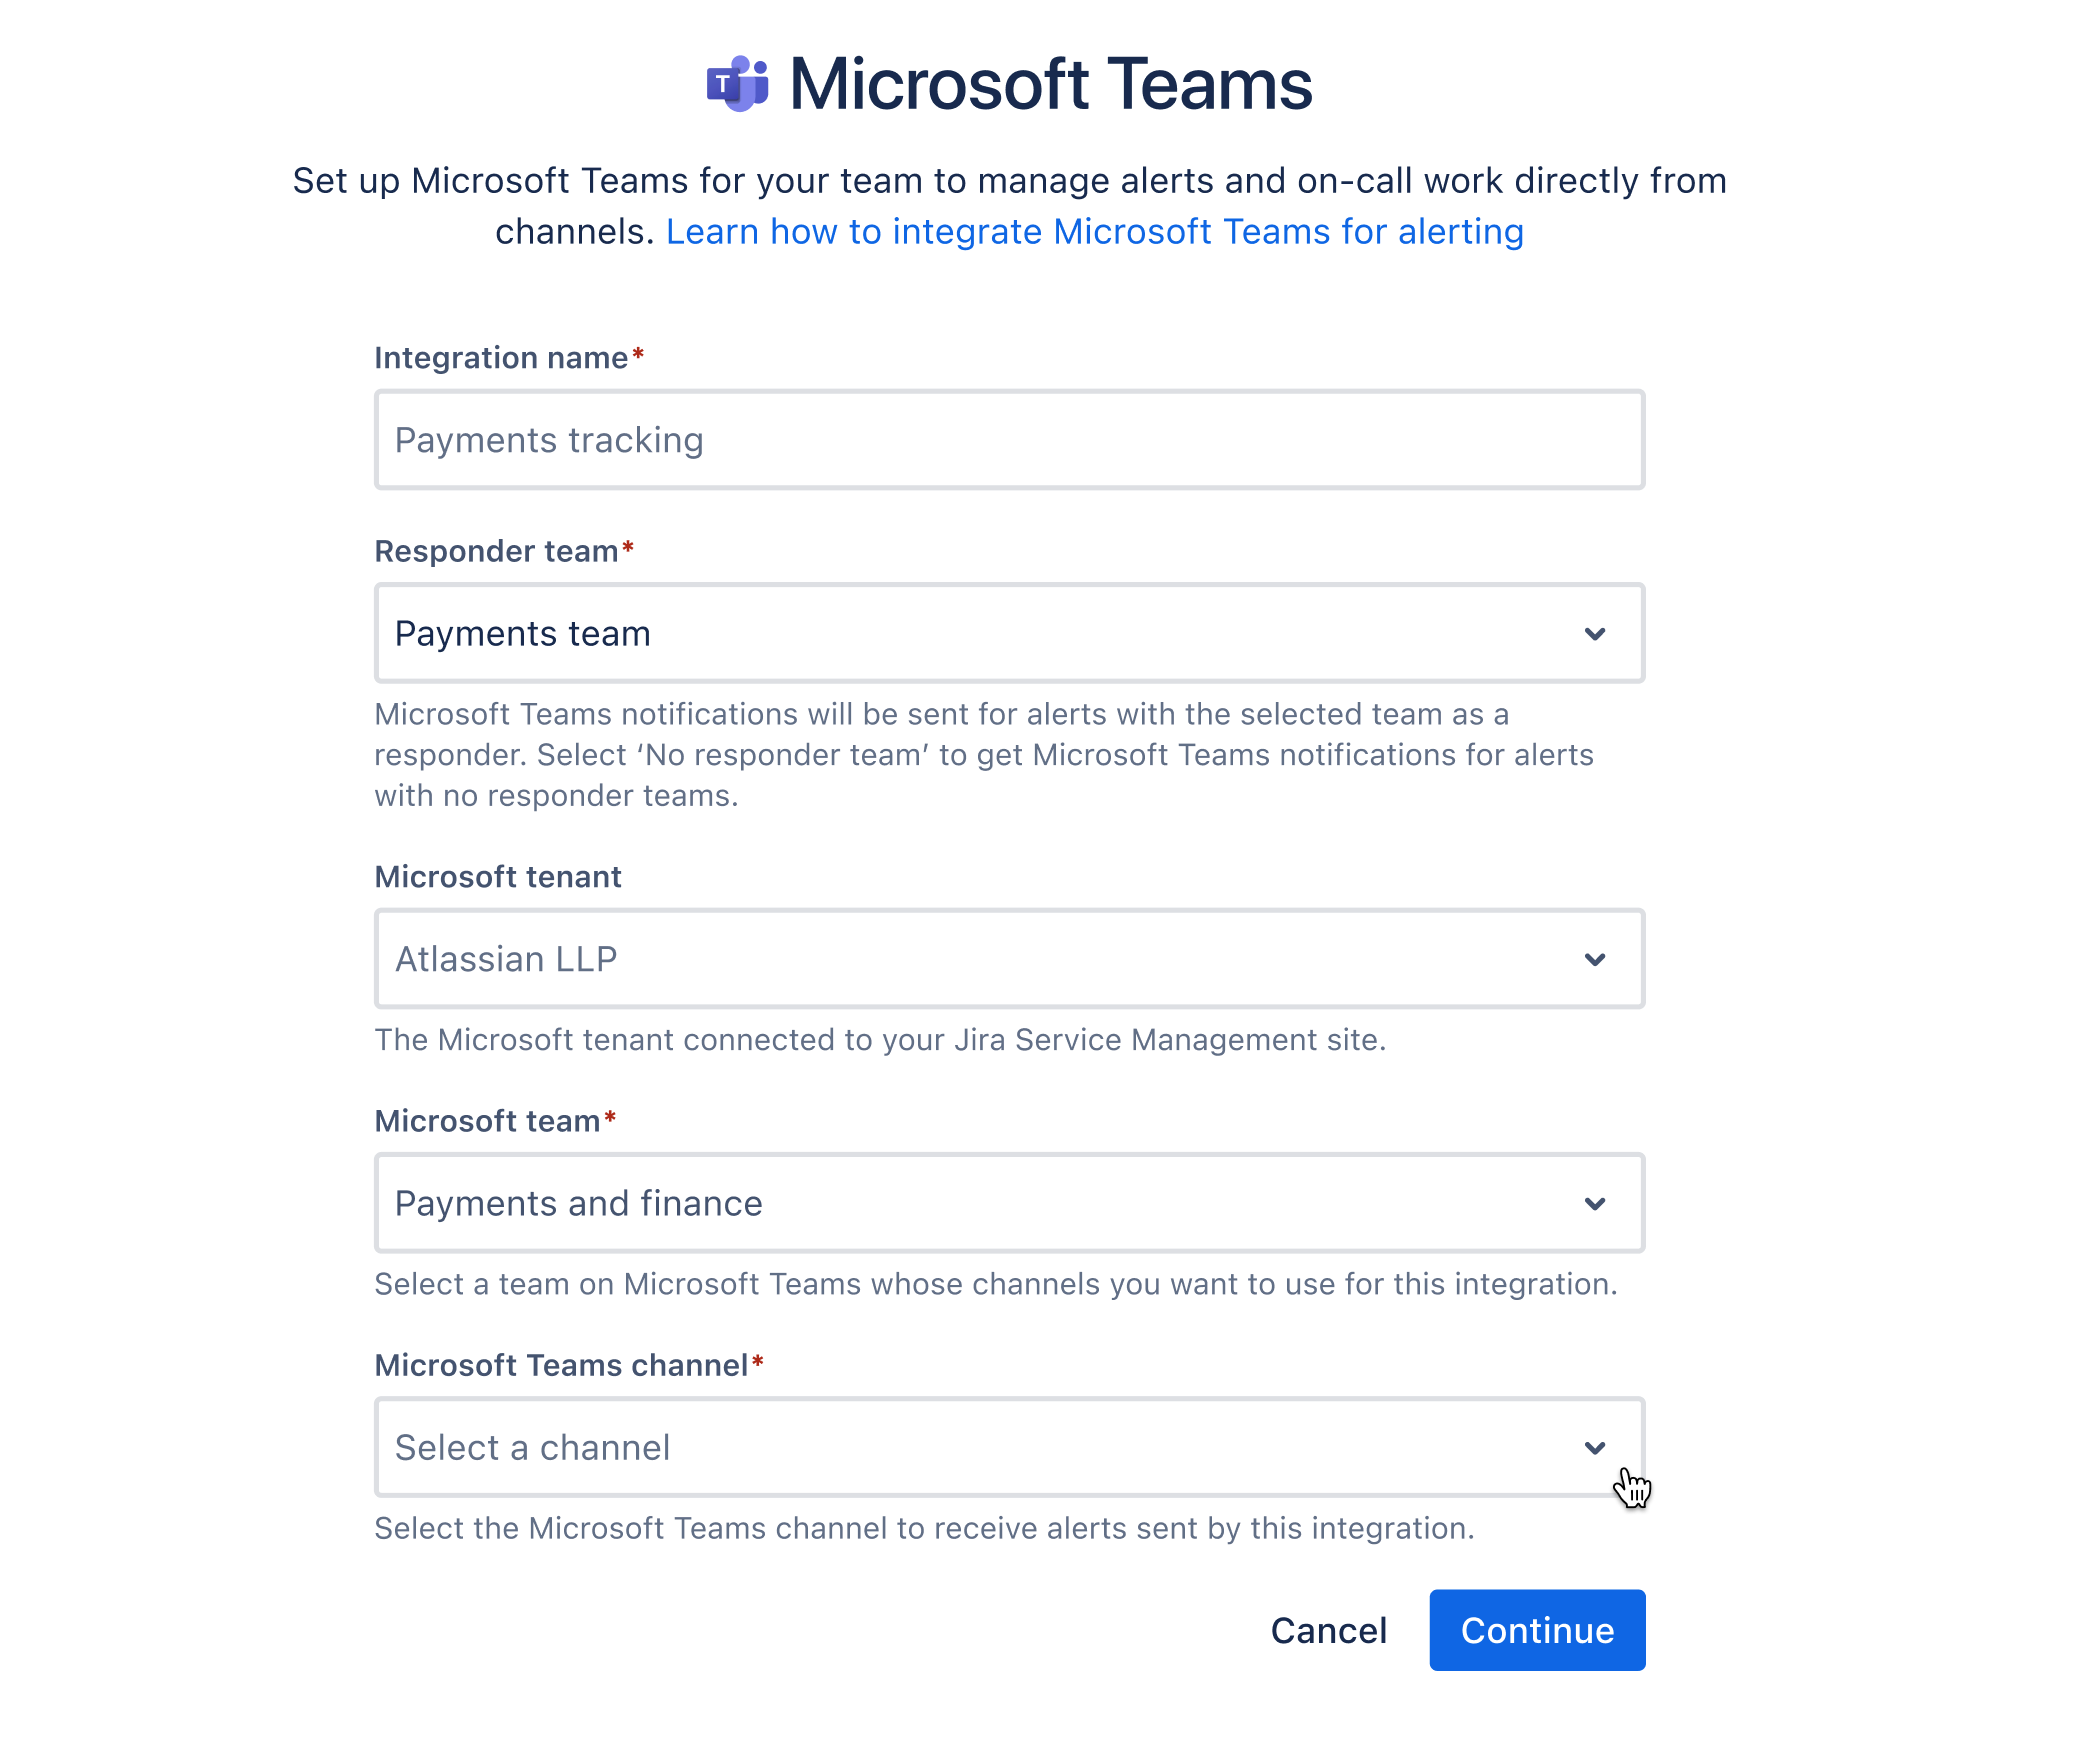 Pola formularzy integracji Microsoft Teams